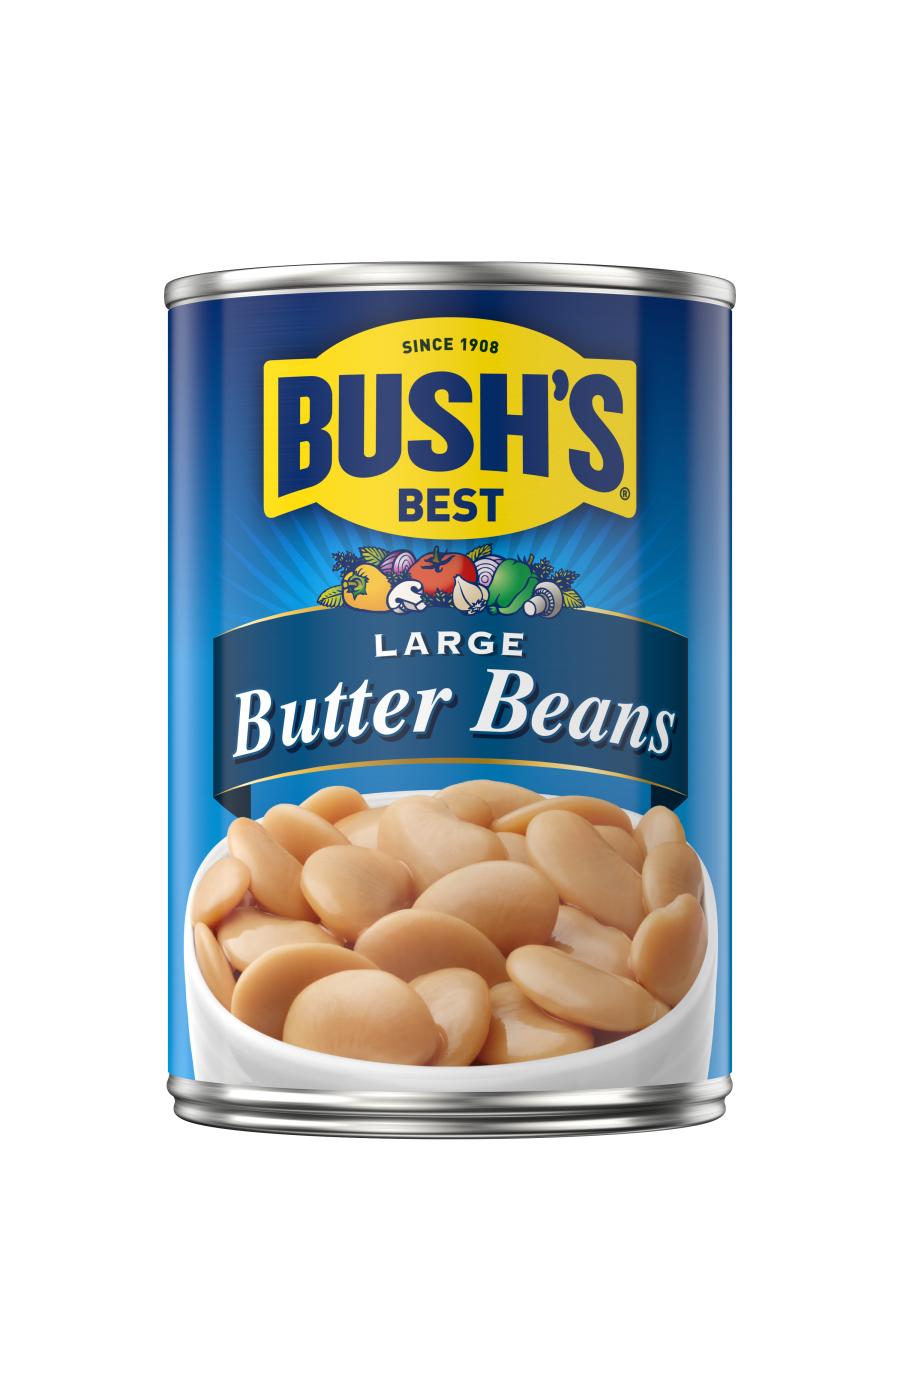 Bush's Best Large Butter Beans; image 1 of 4